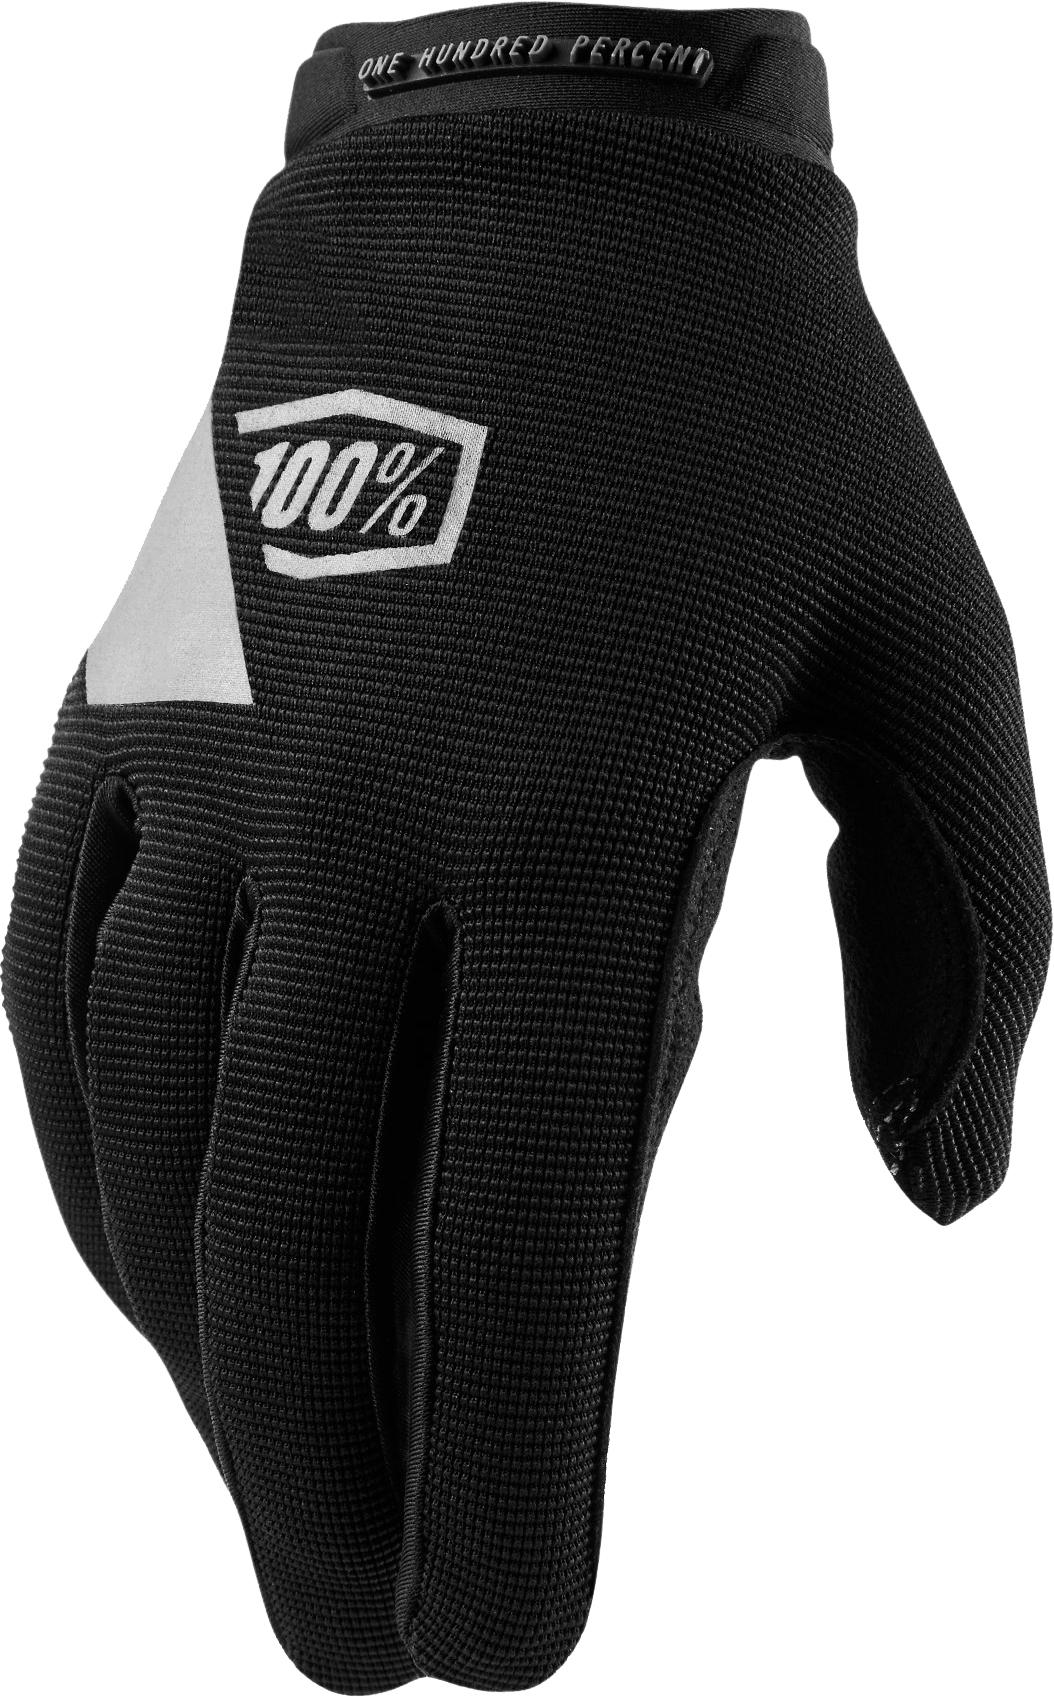 100% Womens Ridecamp Mtb Gloves - Black